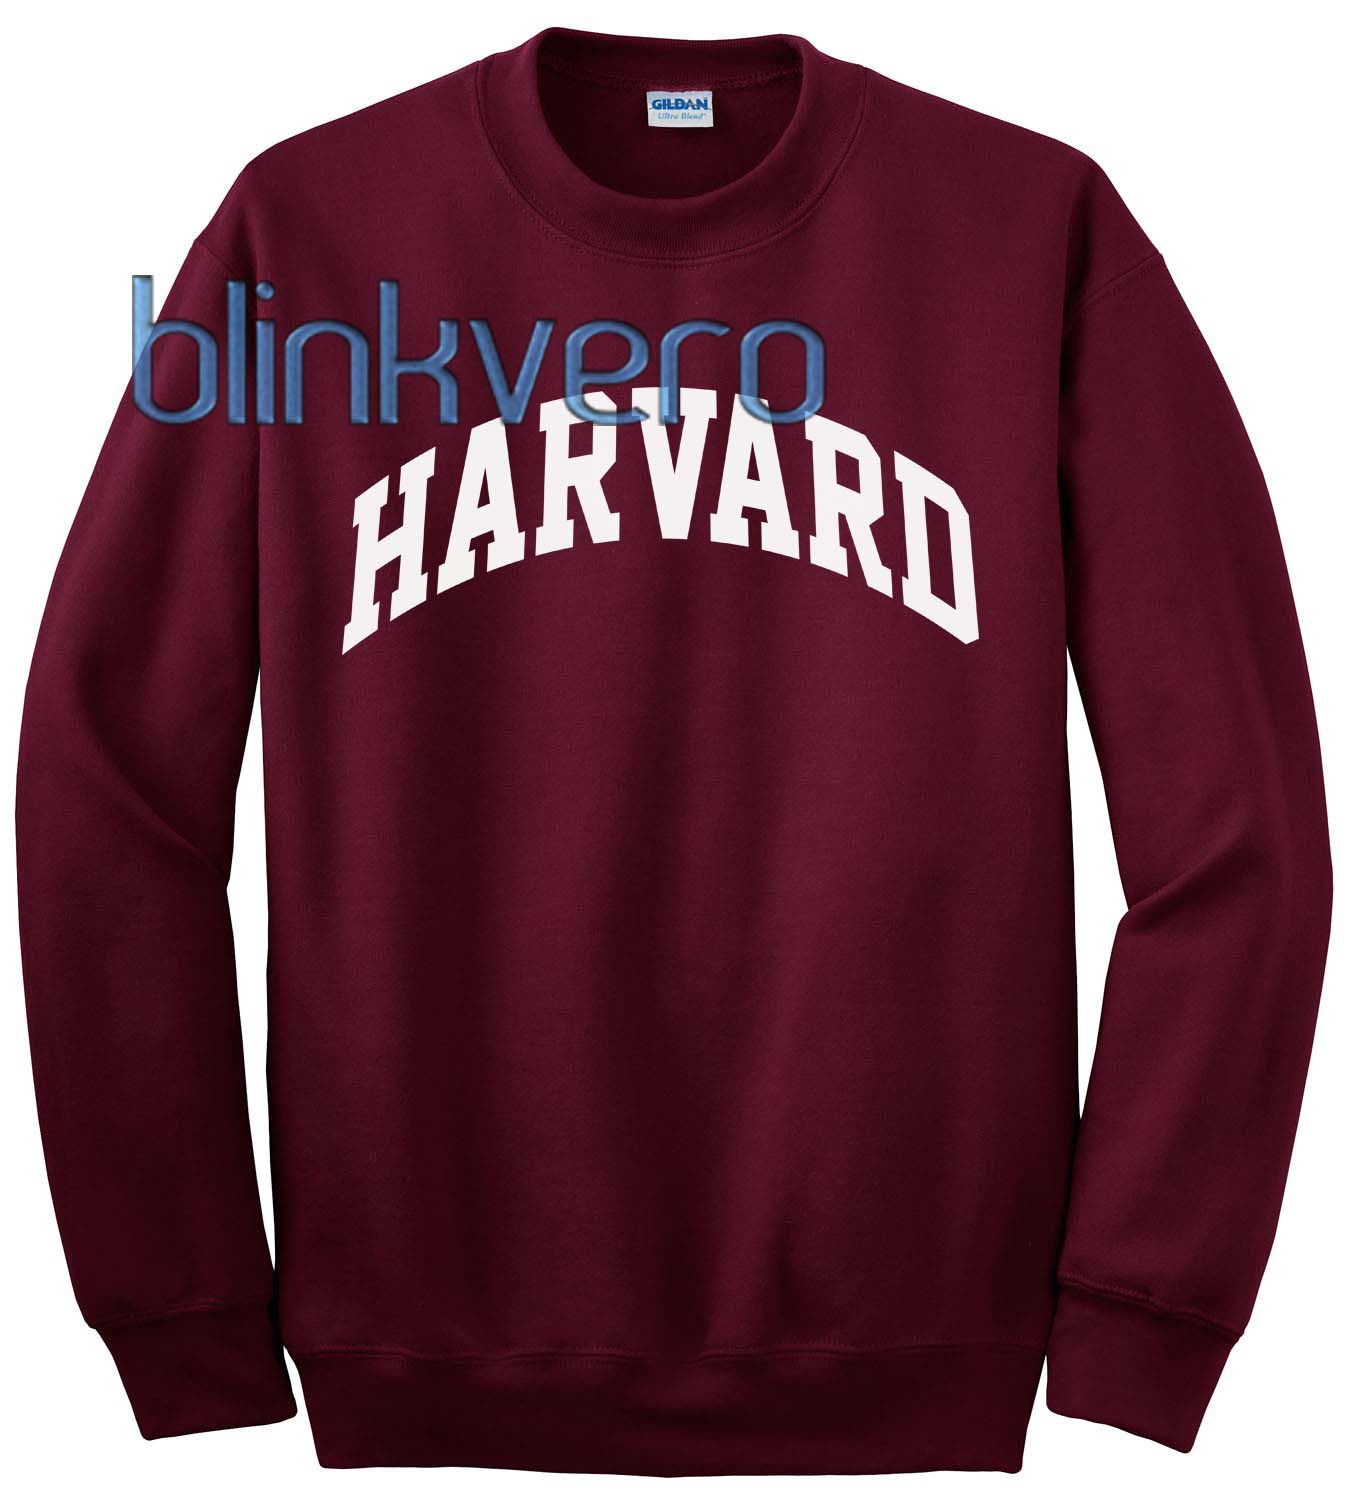 harvard university girls and mens hoodies tshirt top sweatshirt unisex ...